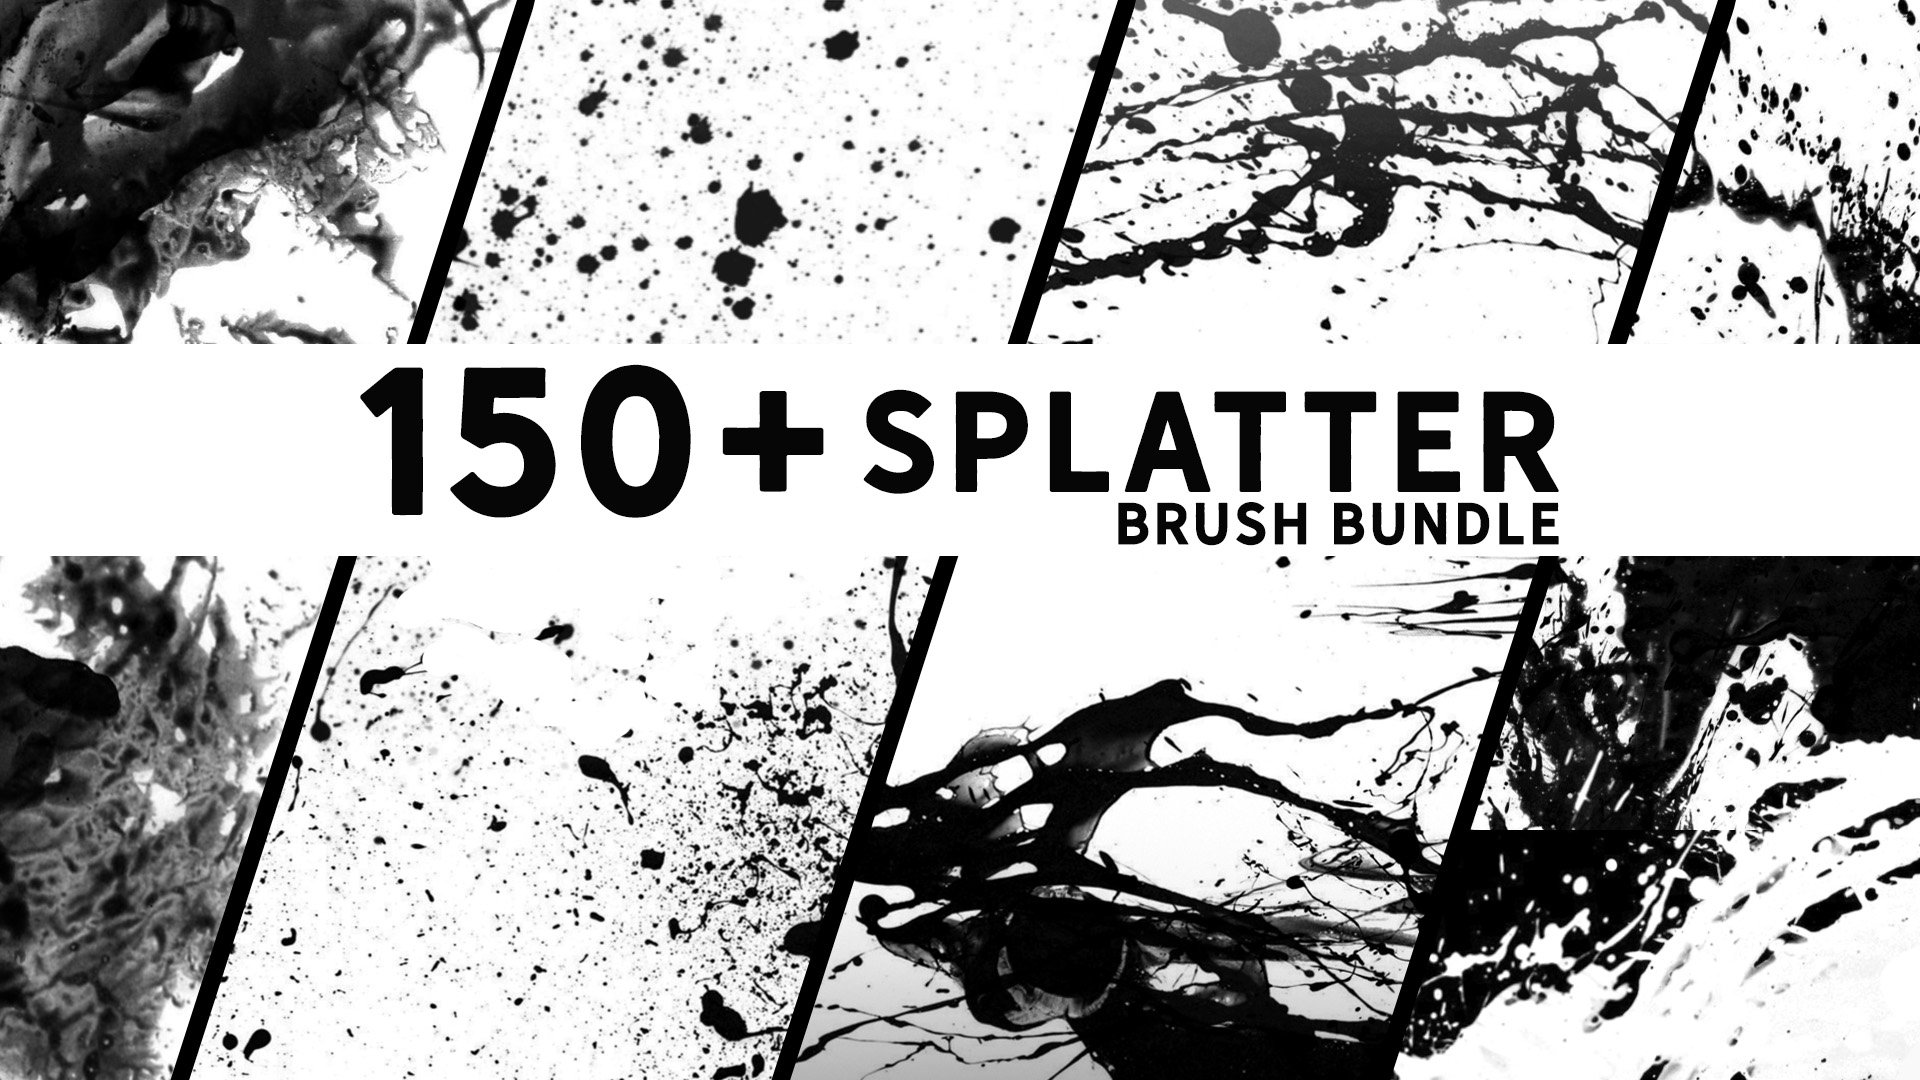 150+ Photoshop Splatter Brush Bundlecover image.